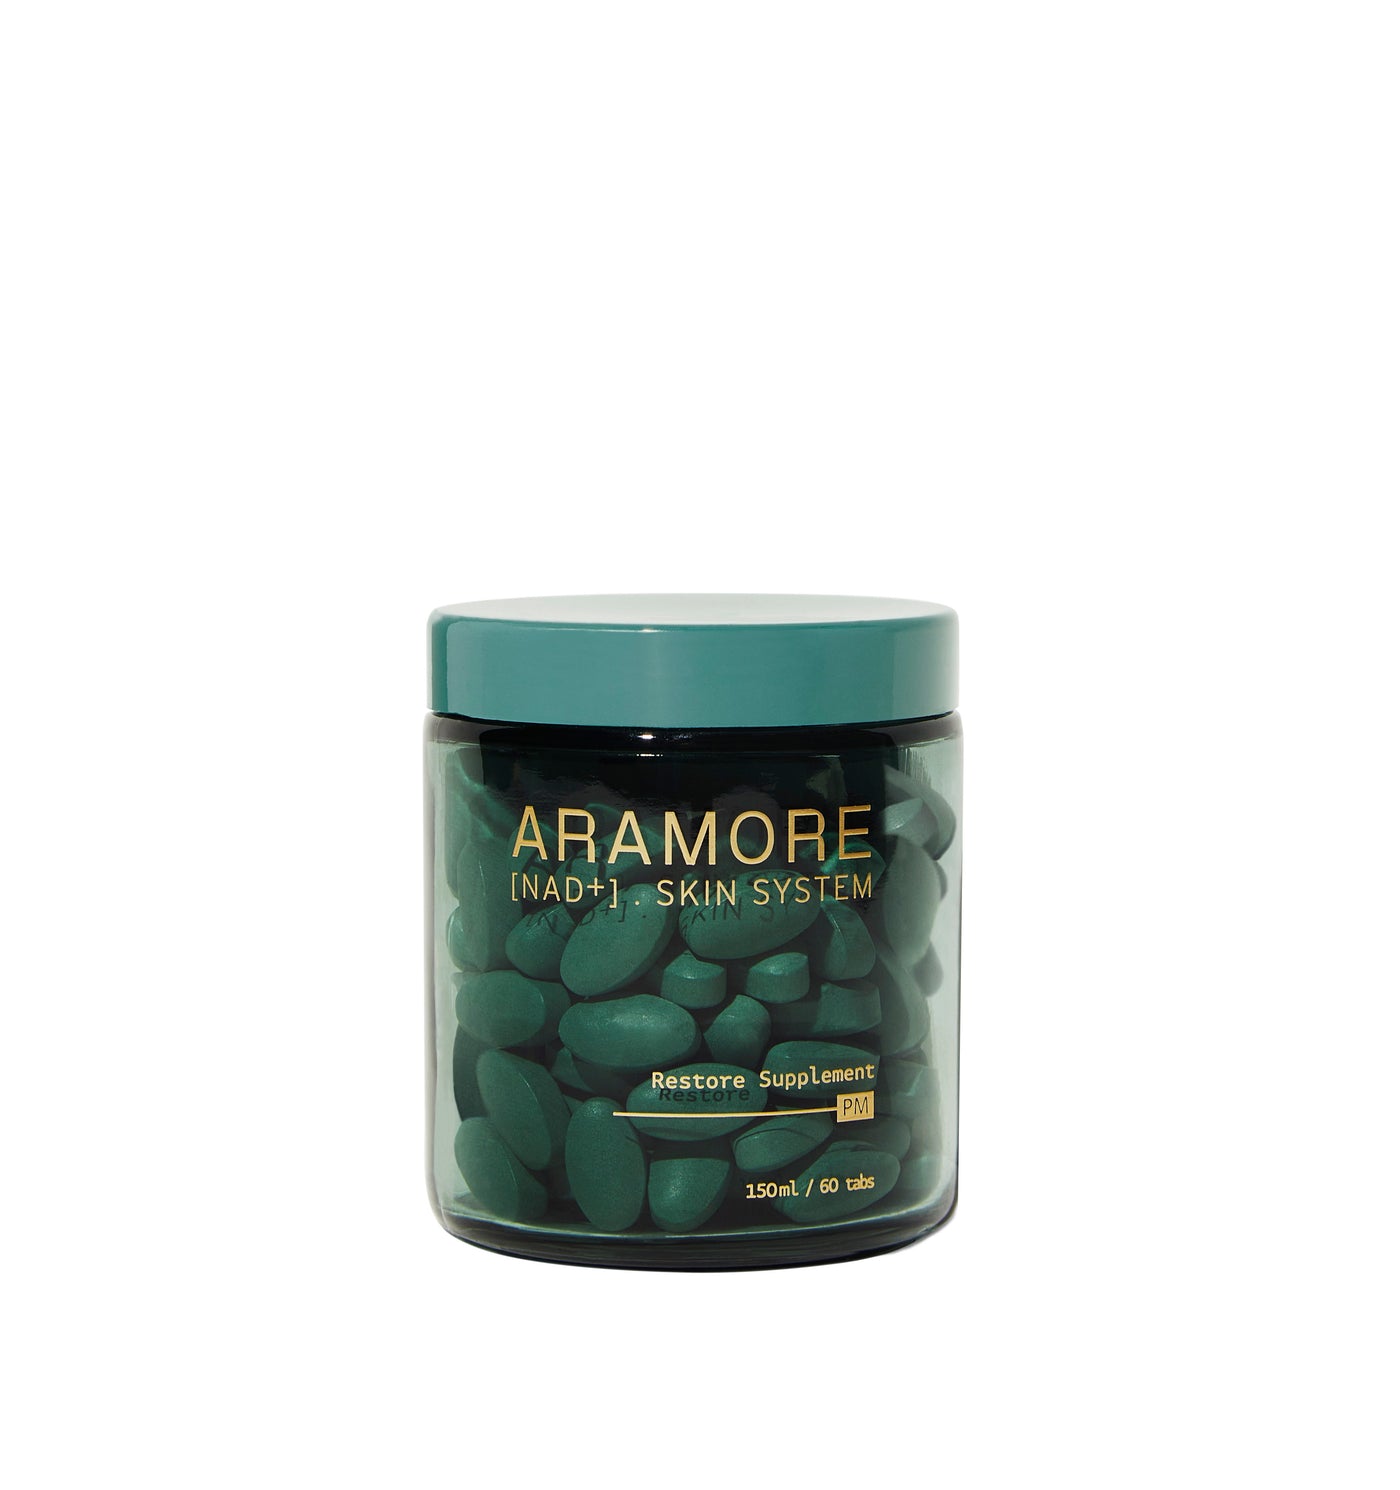 Aramore Restore Supplement